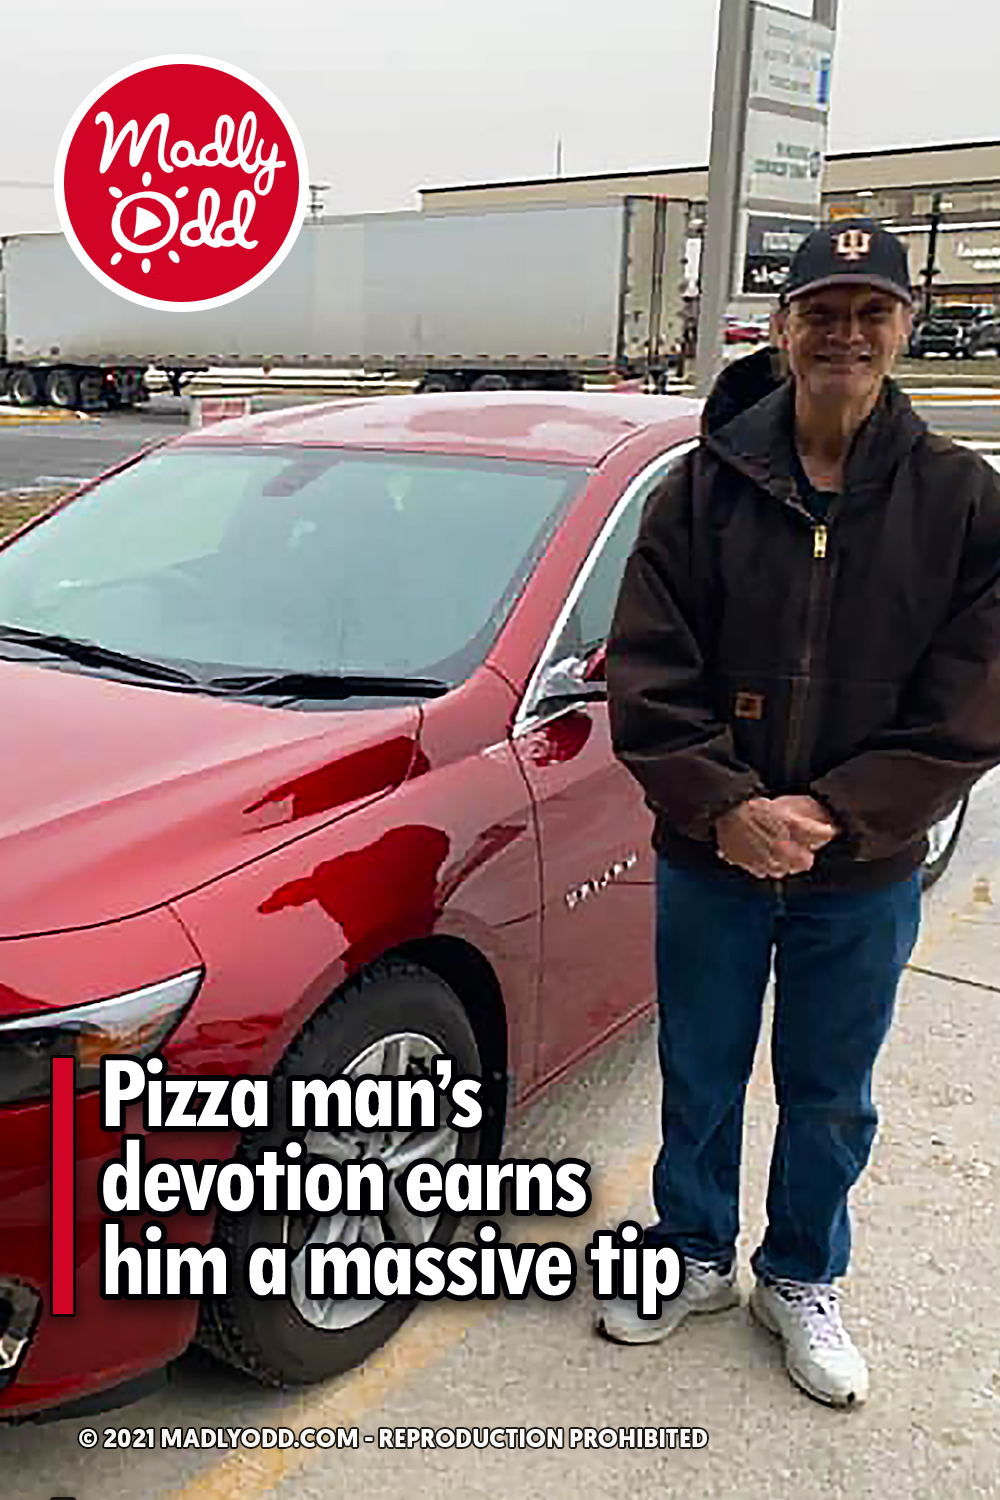 Pizza man’s devotion earns him a massive tip